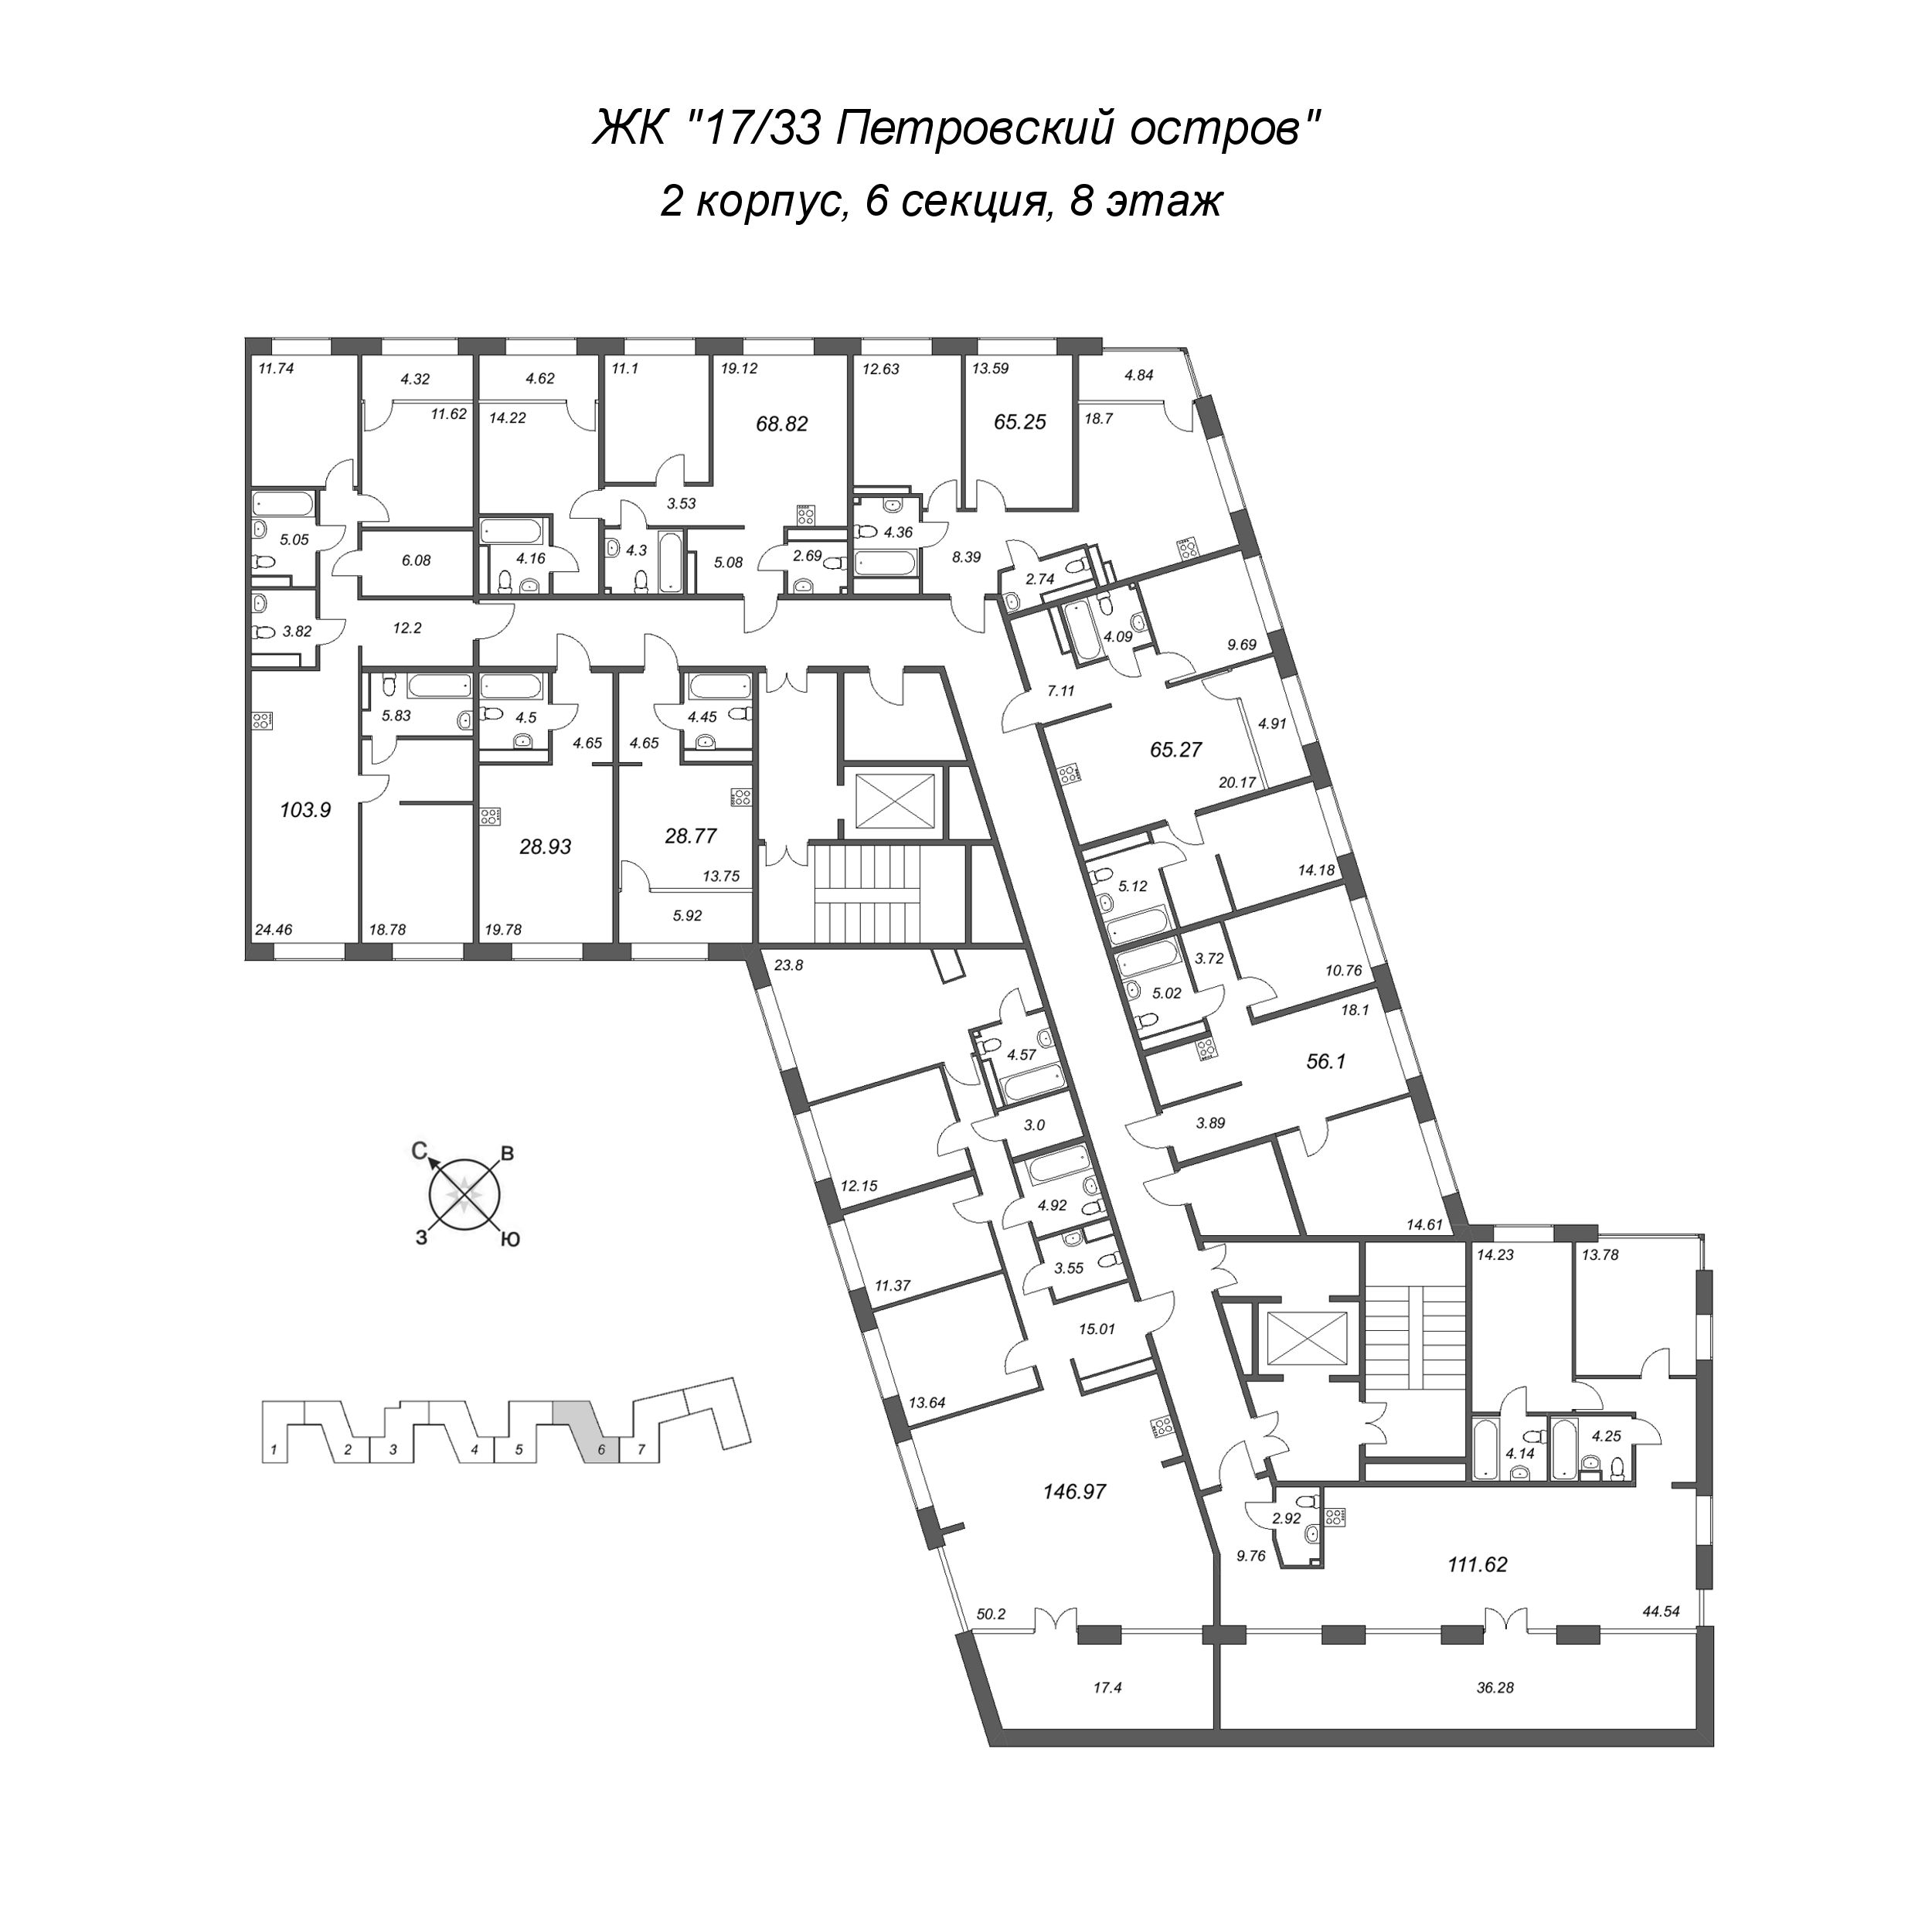 3-комнатная (Евро) квартира, 56.1 м² - планировка этажа